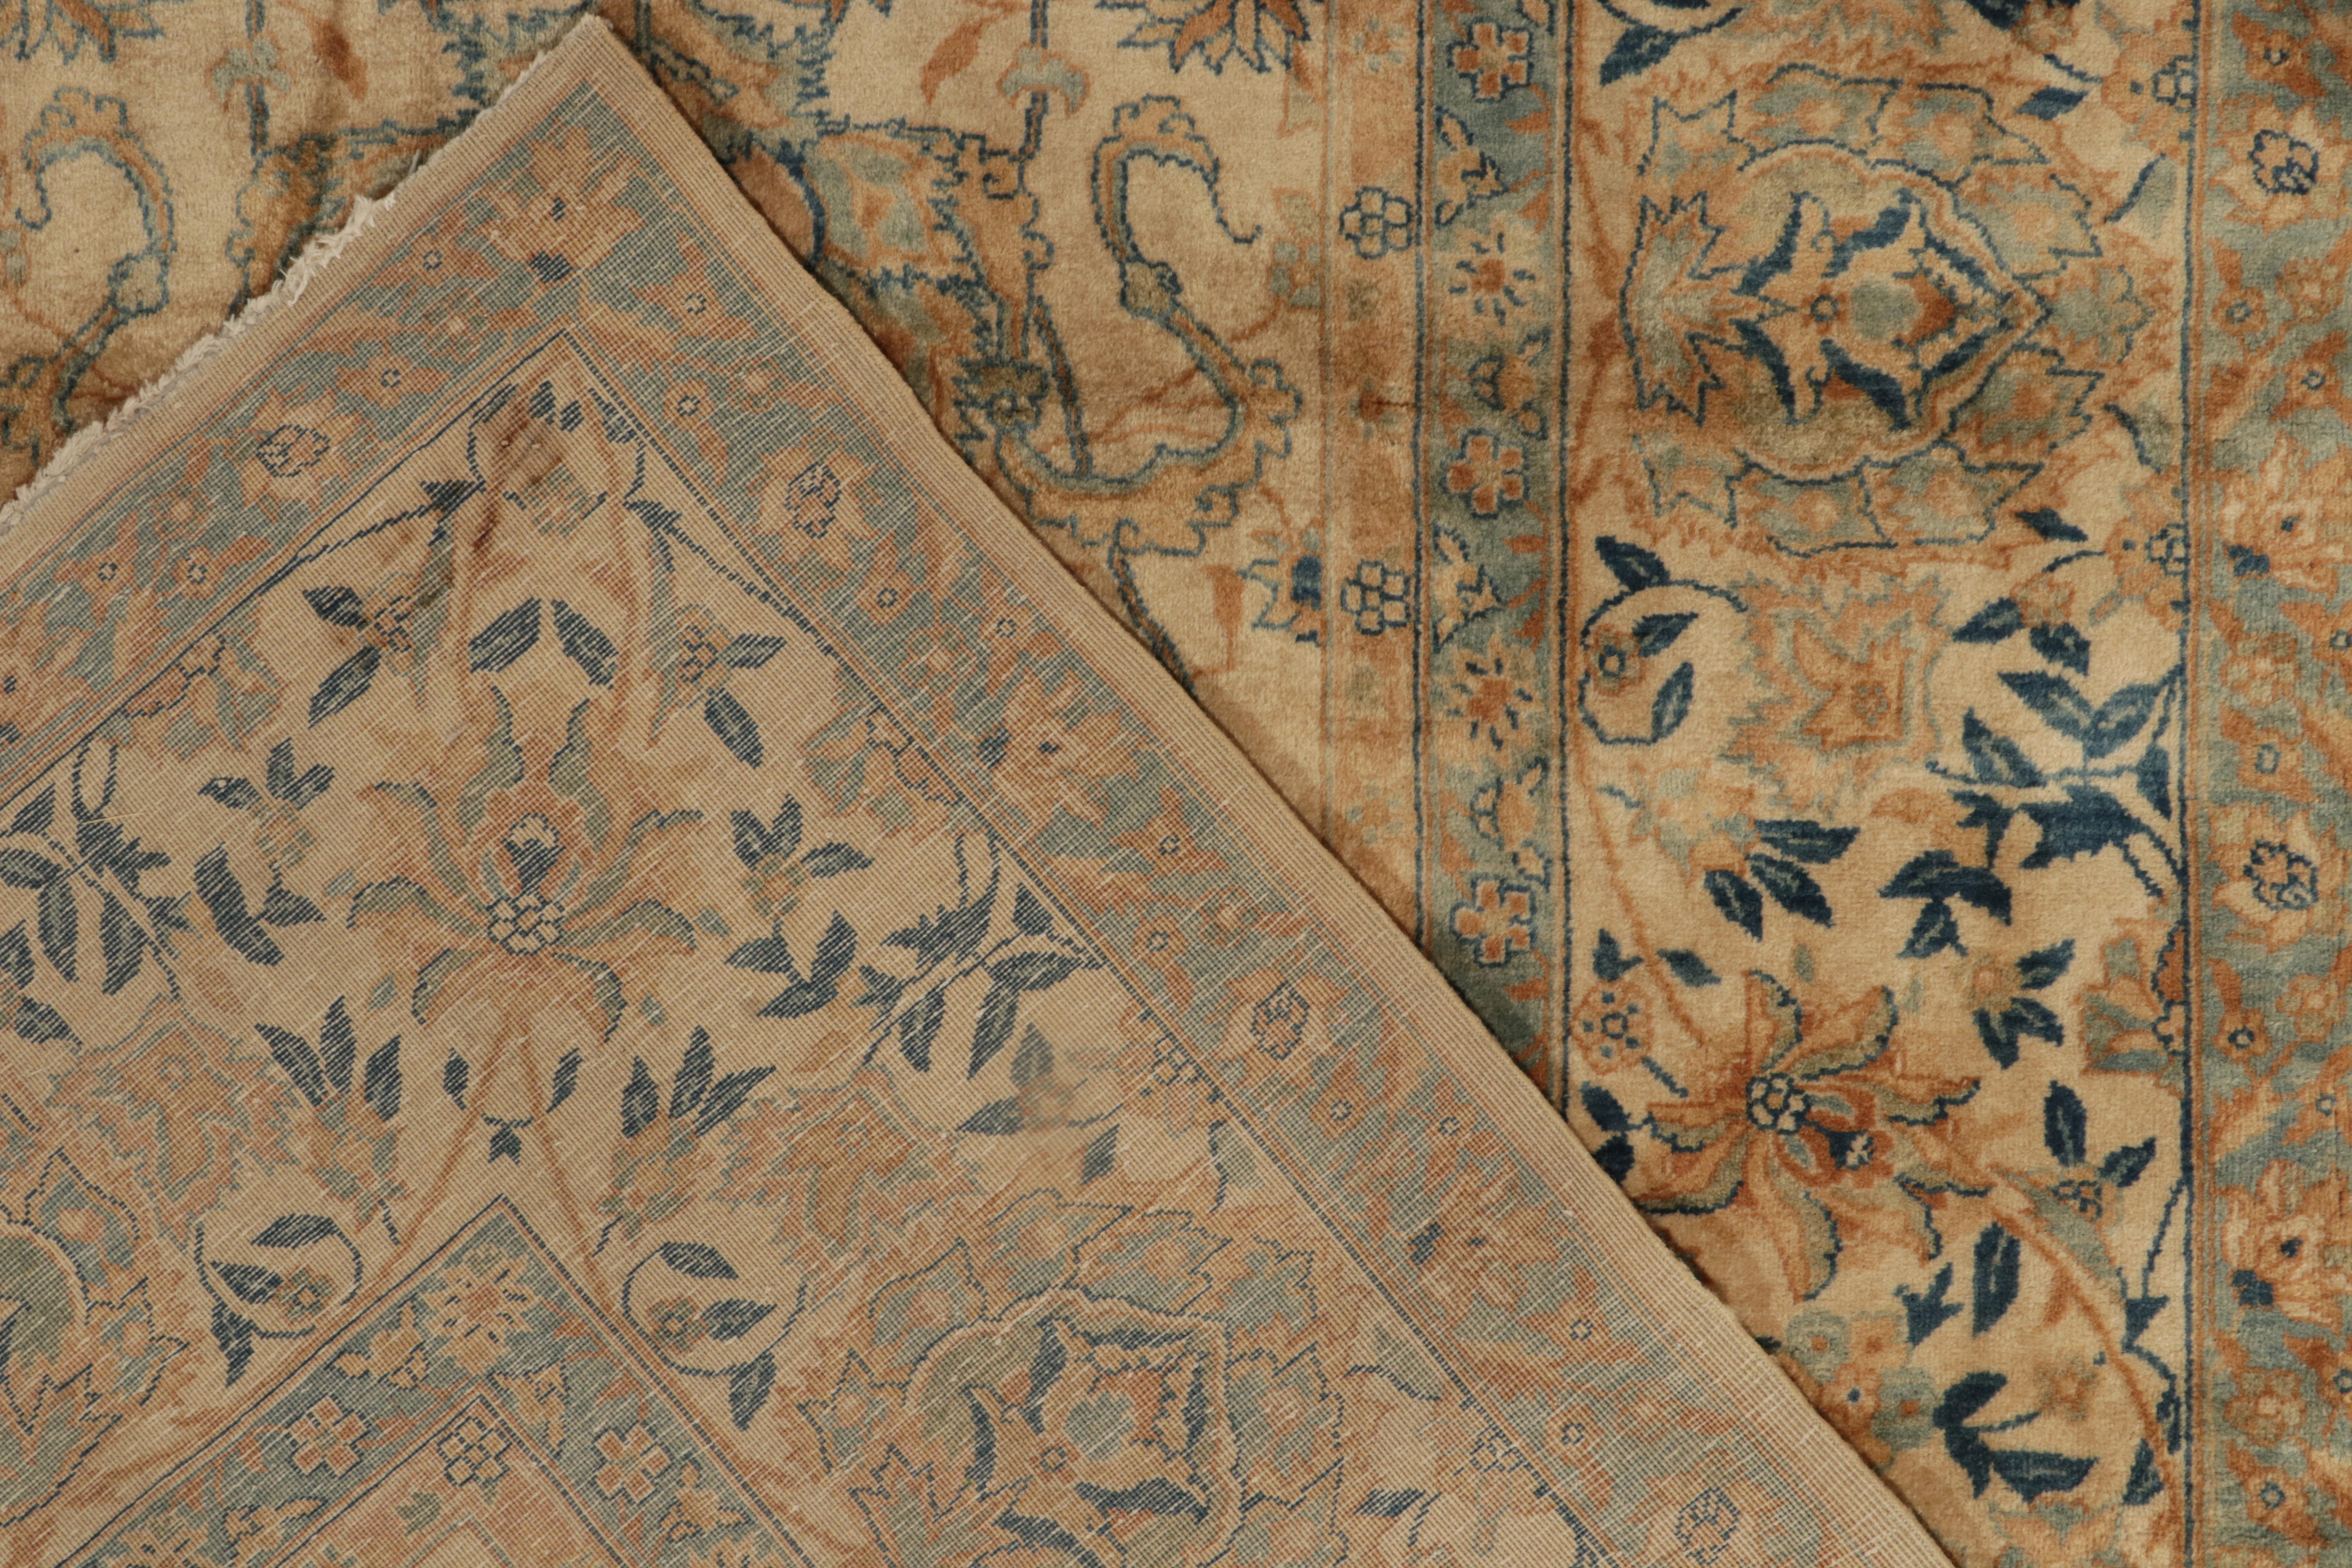 Wool Antique Kashan style rug in Beige-Brown, Gold Blue Floral Pattern by Rug & Kilim For Sale